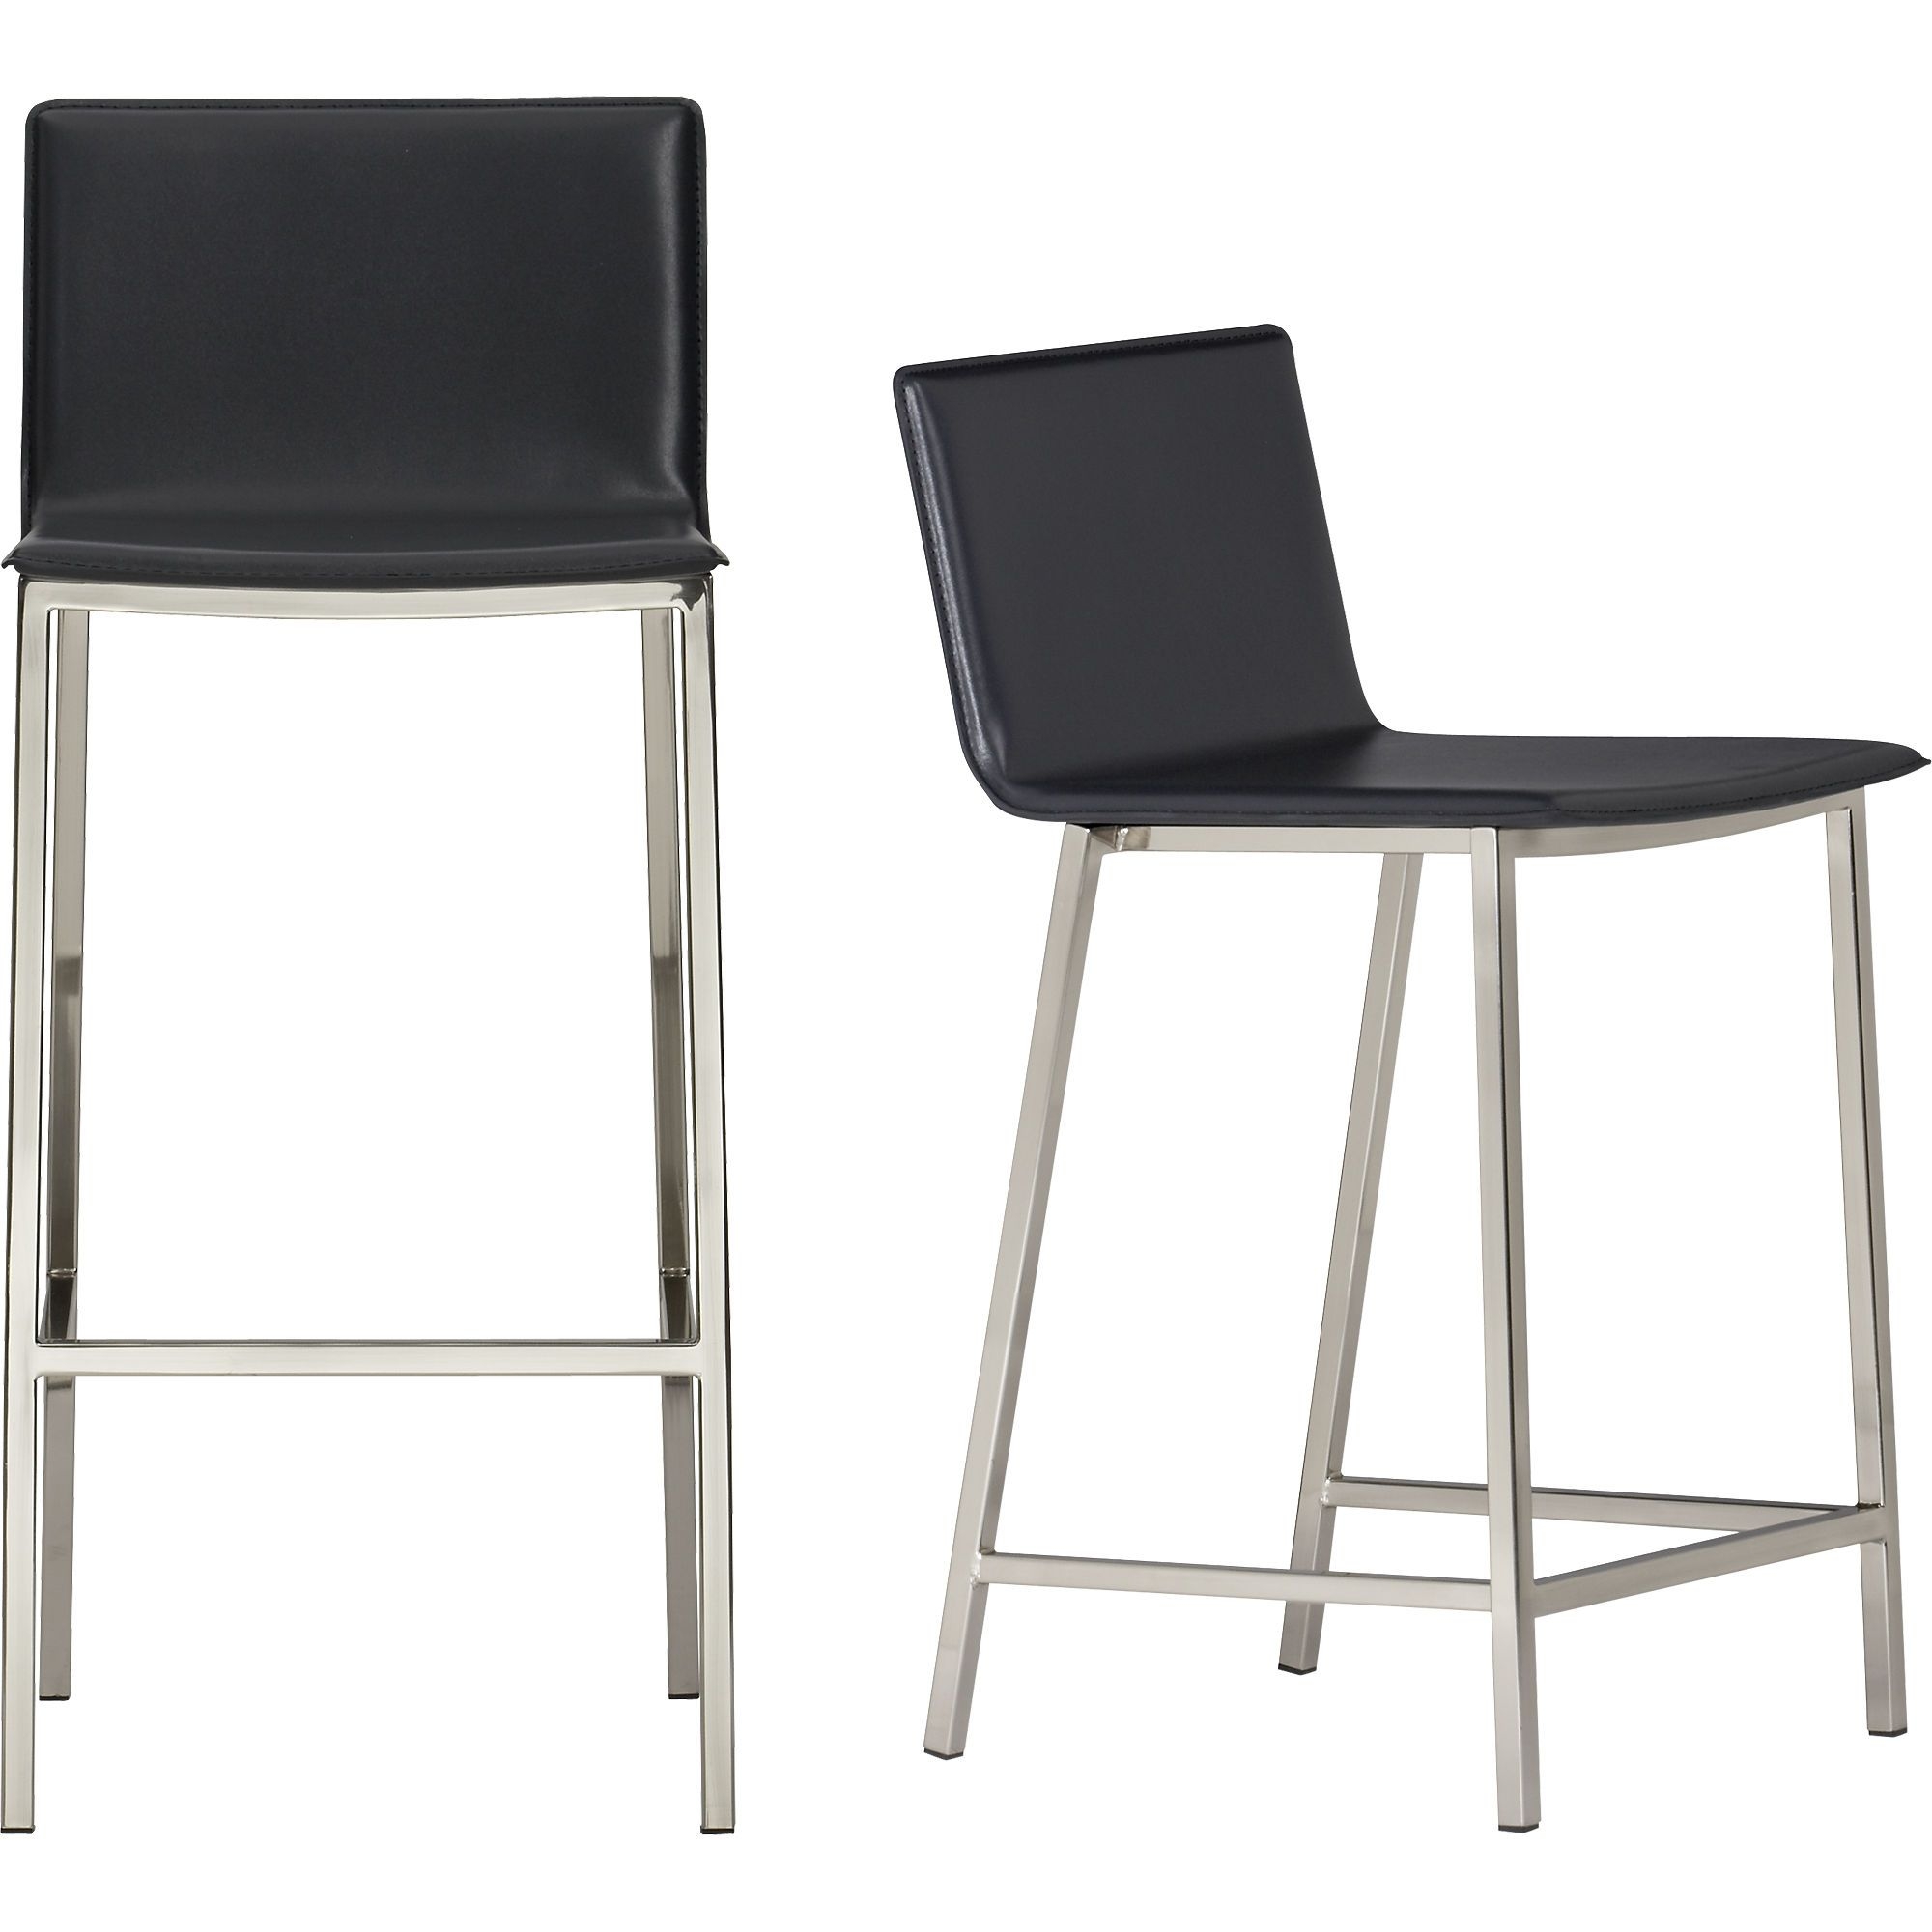 Metal square bar stools 3